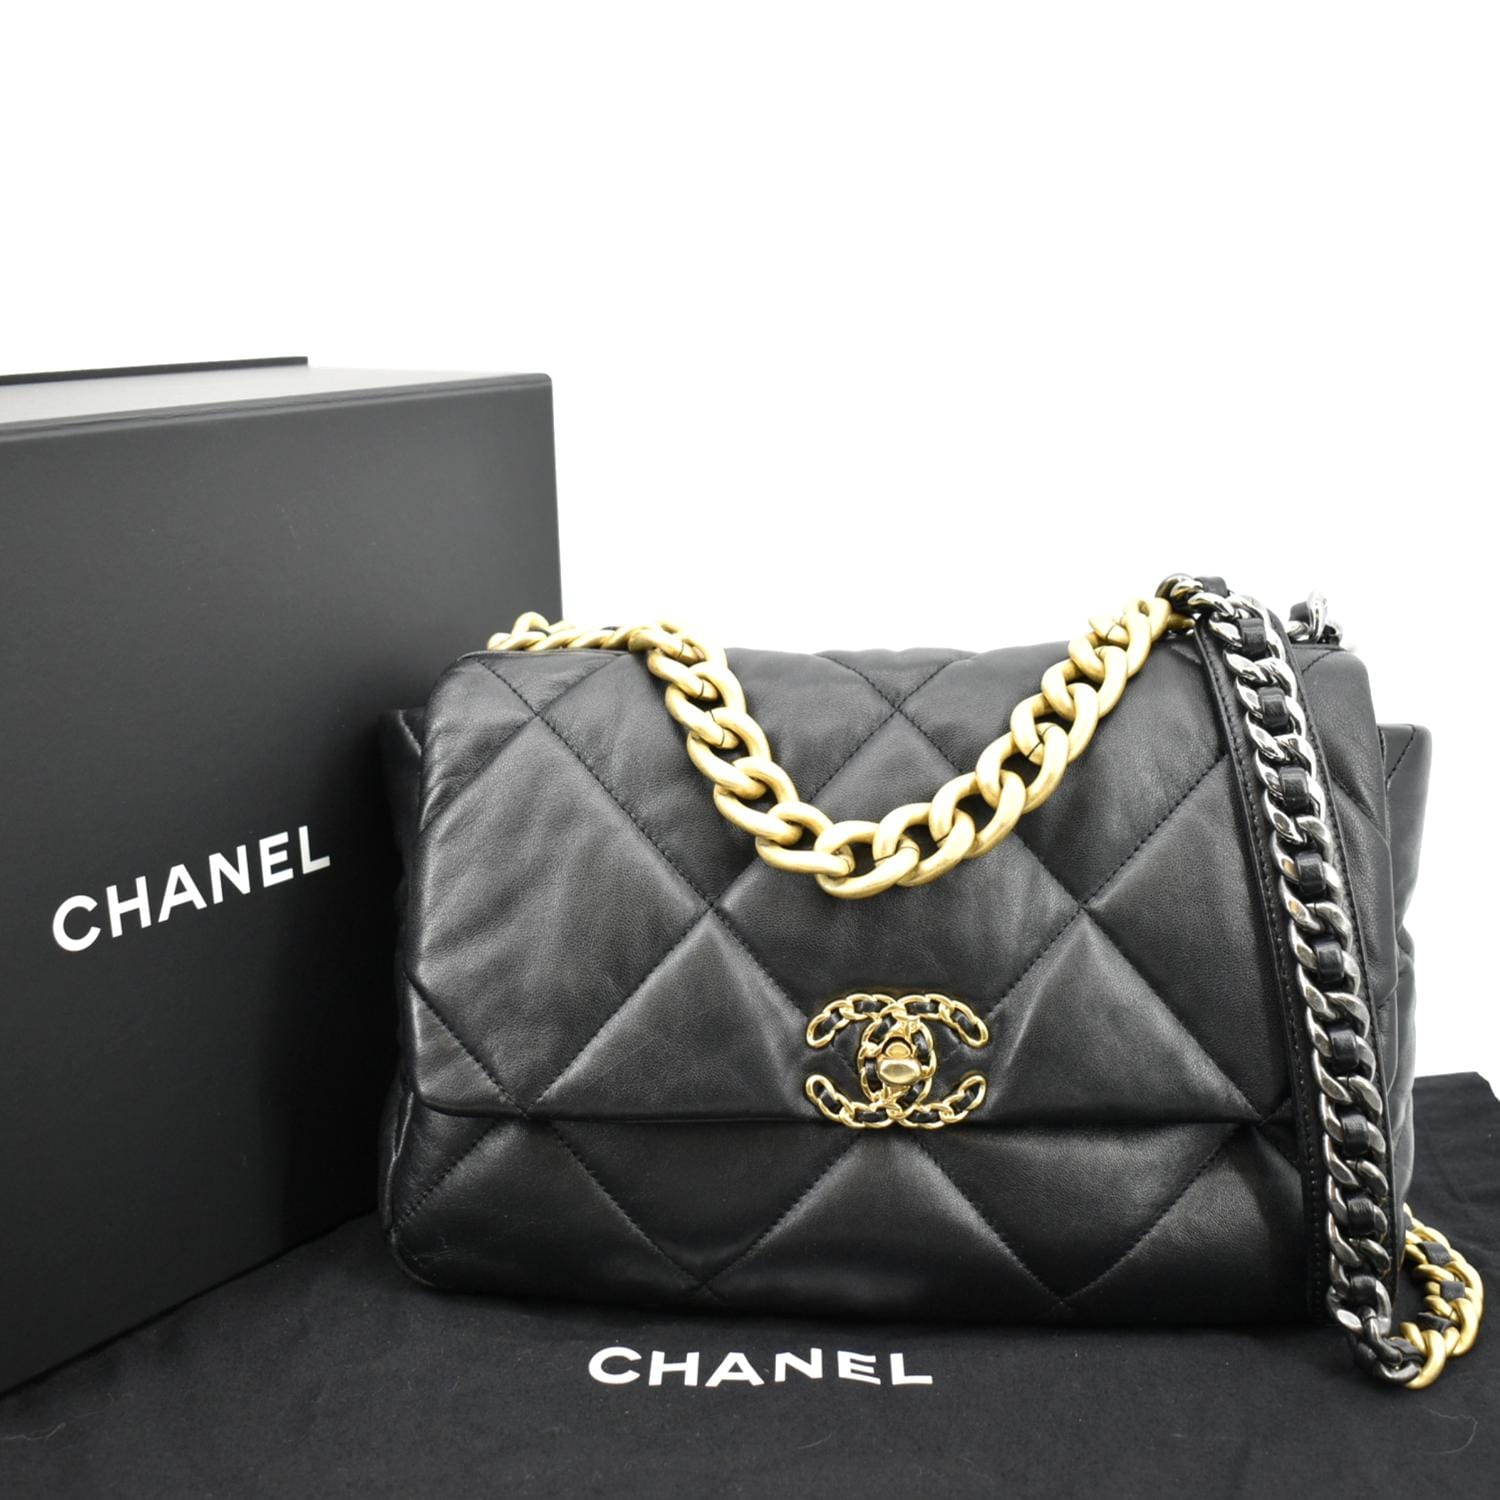 Chanel Rare Vintage Iridescent Champagne Pearl Mini Belt Bum Bag